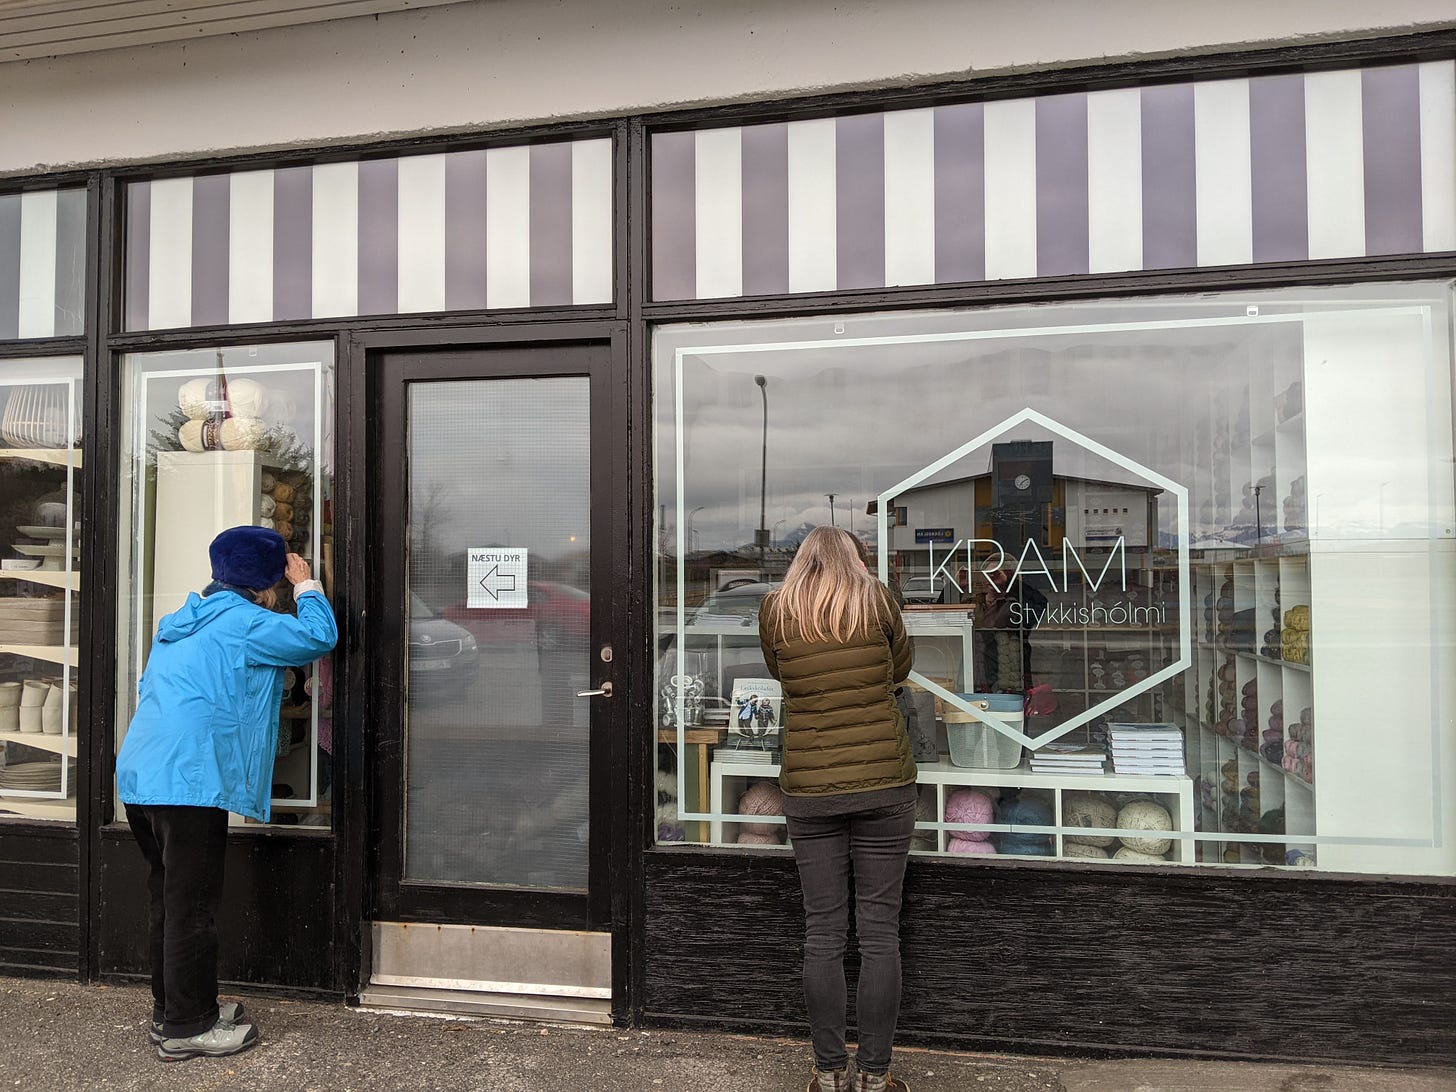 Two women peering through the closed store window of knitting store Kram in Stykkishólmi, Iceland.